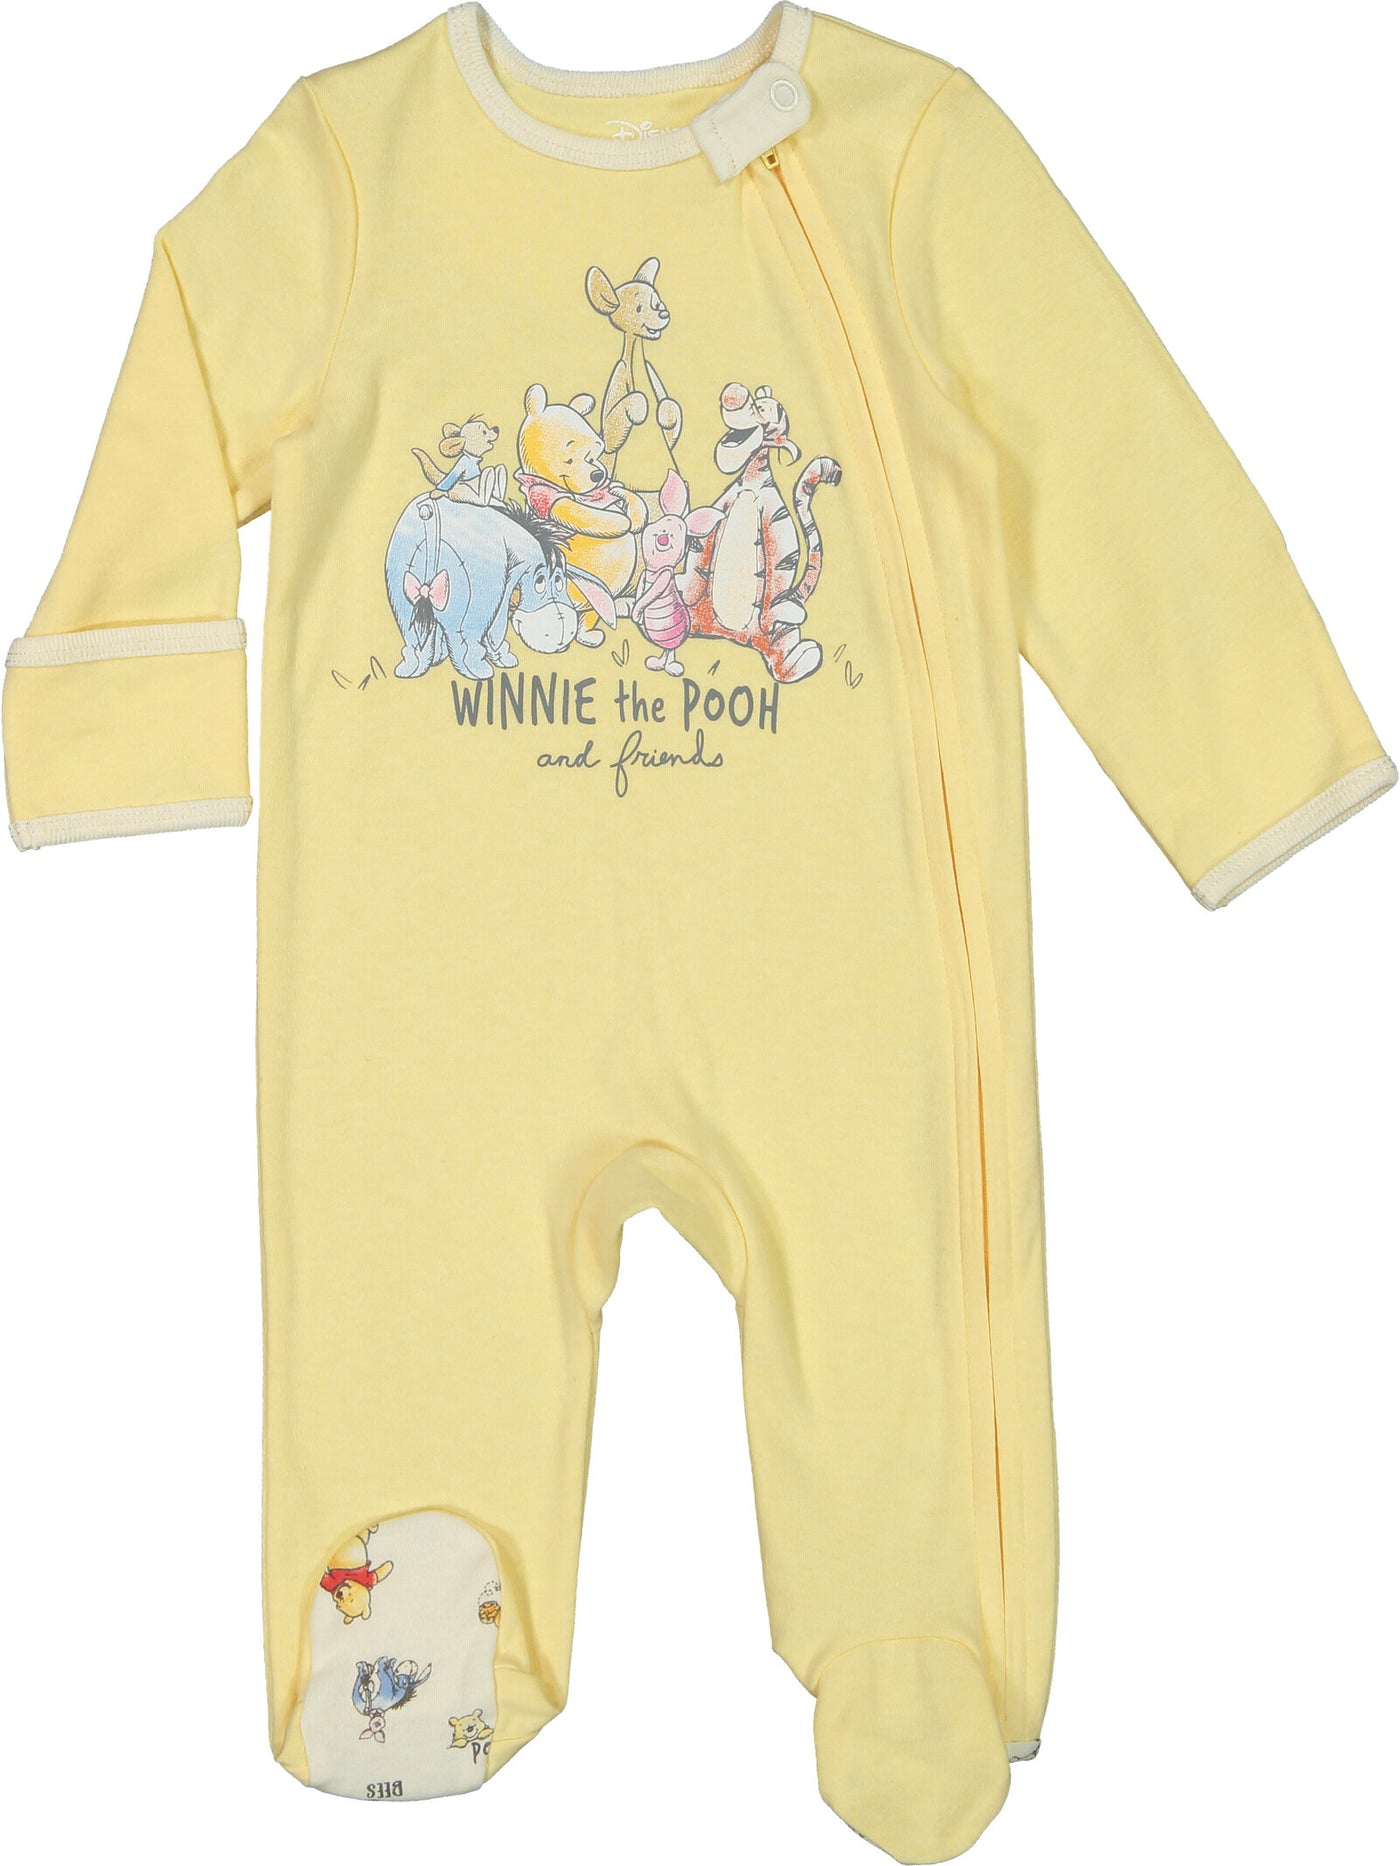 Winnie the Pooh 4 Piece Outfit Set: Sleep N' Play Coverall Bib Blanket Burp Cloth